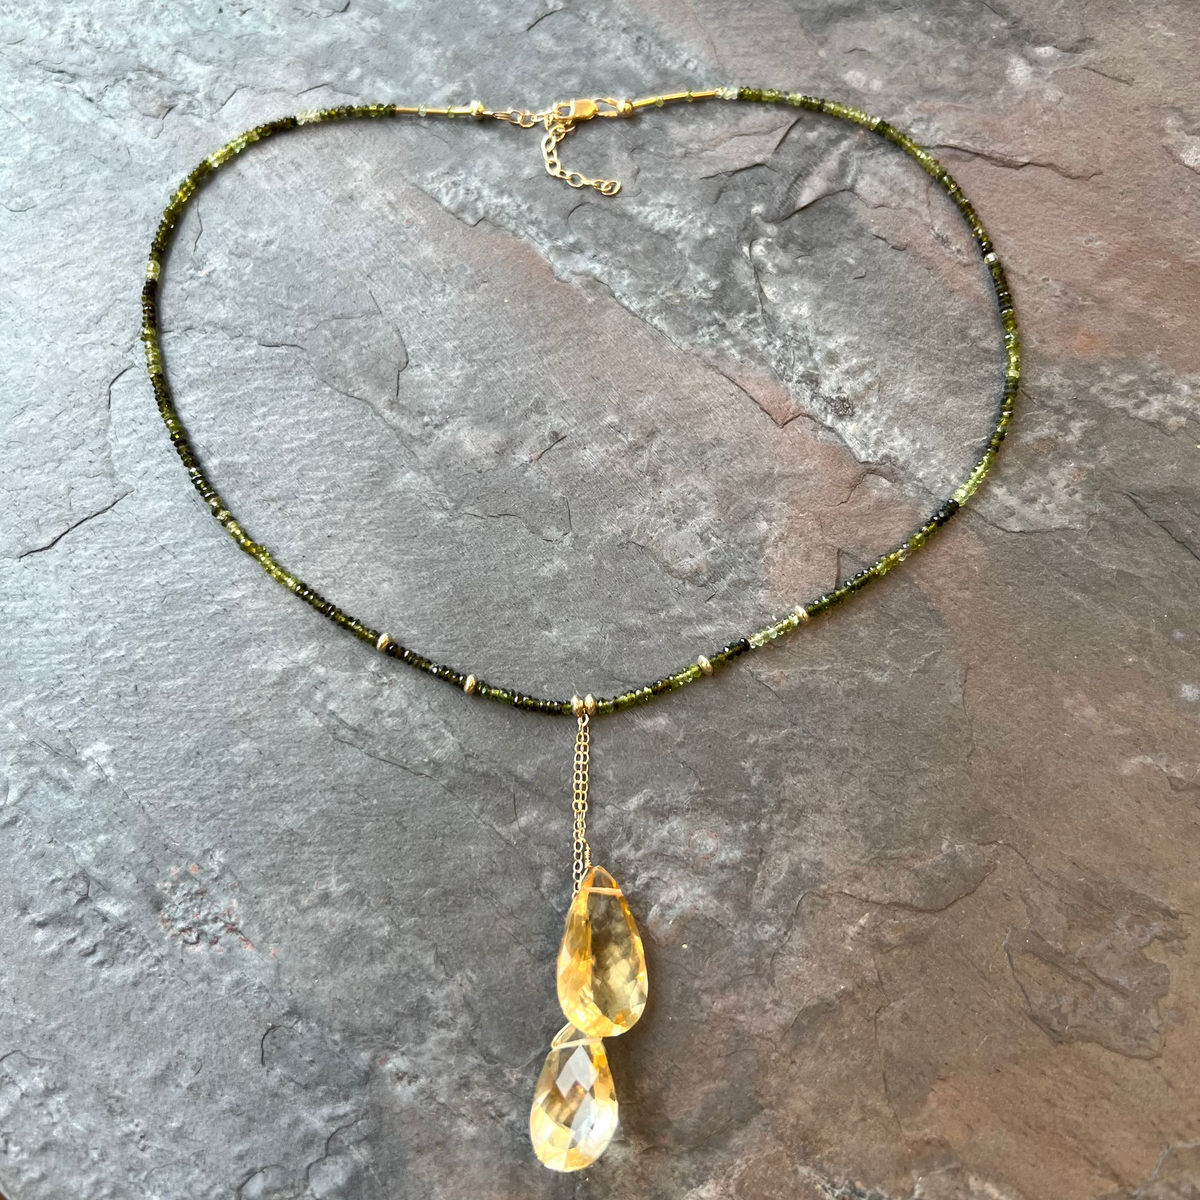 Green Tourmaline Citrine 14K Gold necklace handmade by Garden of Silver in Westhampton Beach, New York. www.gardenofsilver.com